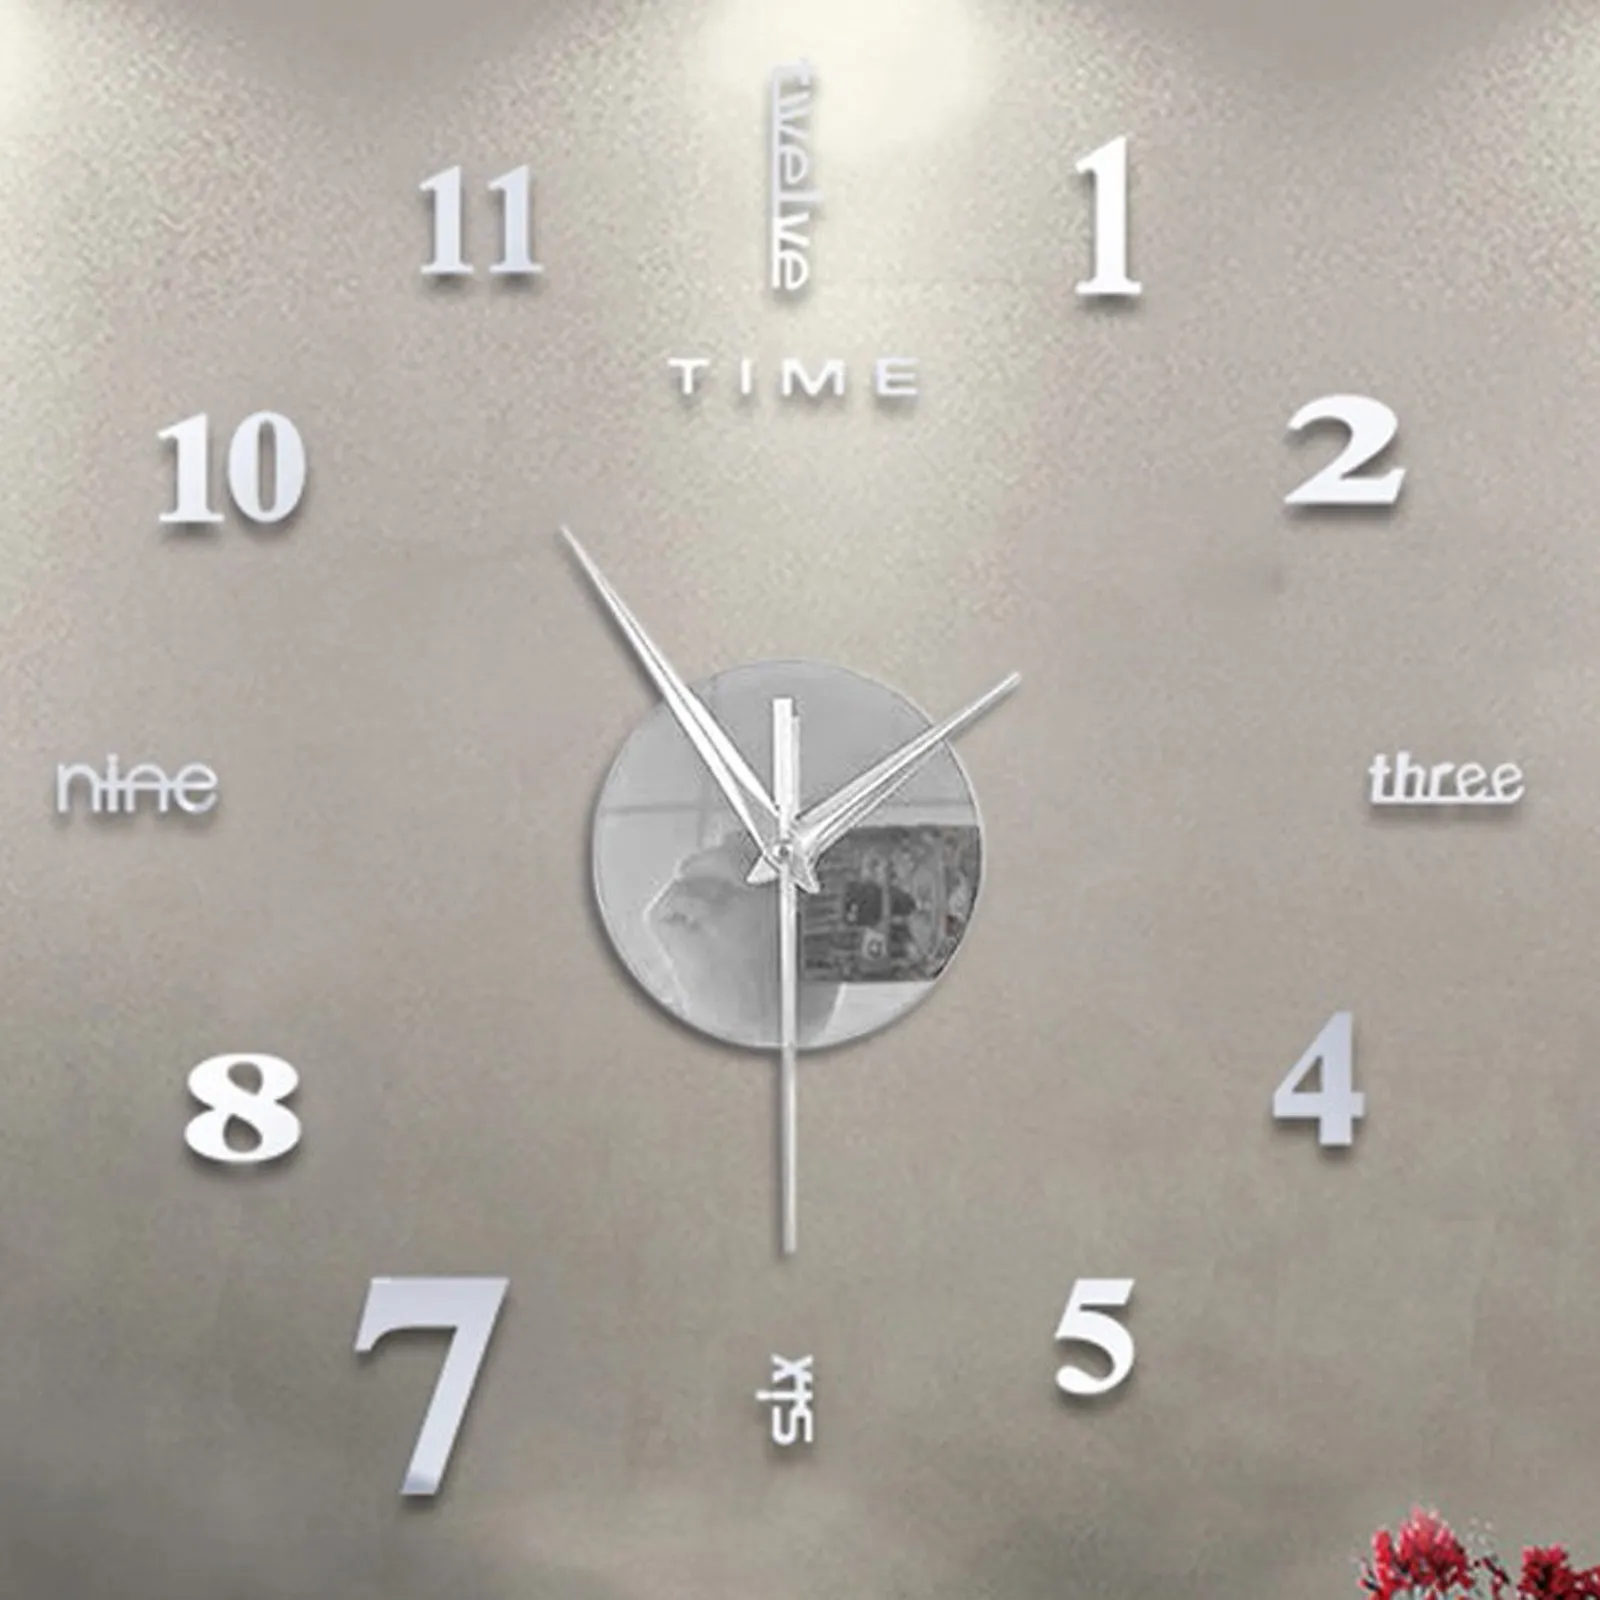 Frameless Diy Wall Mute Clock 3d Mirror Sticker Home Decor Wall Mute Clock 12-hour Display Wall Clock With Time Mark 50x50cm